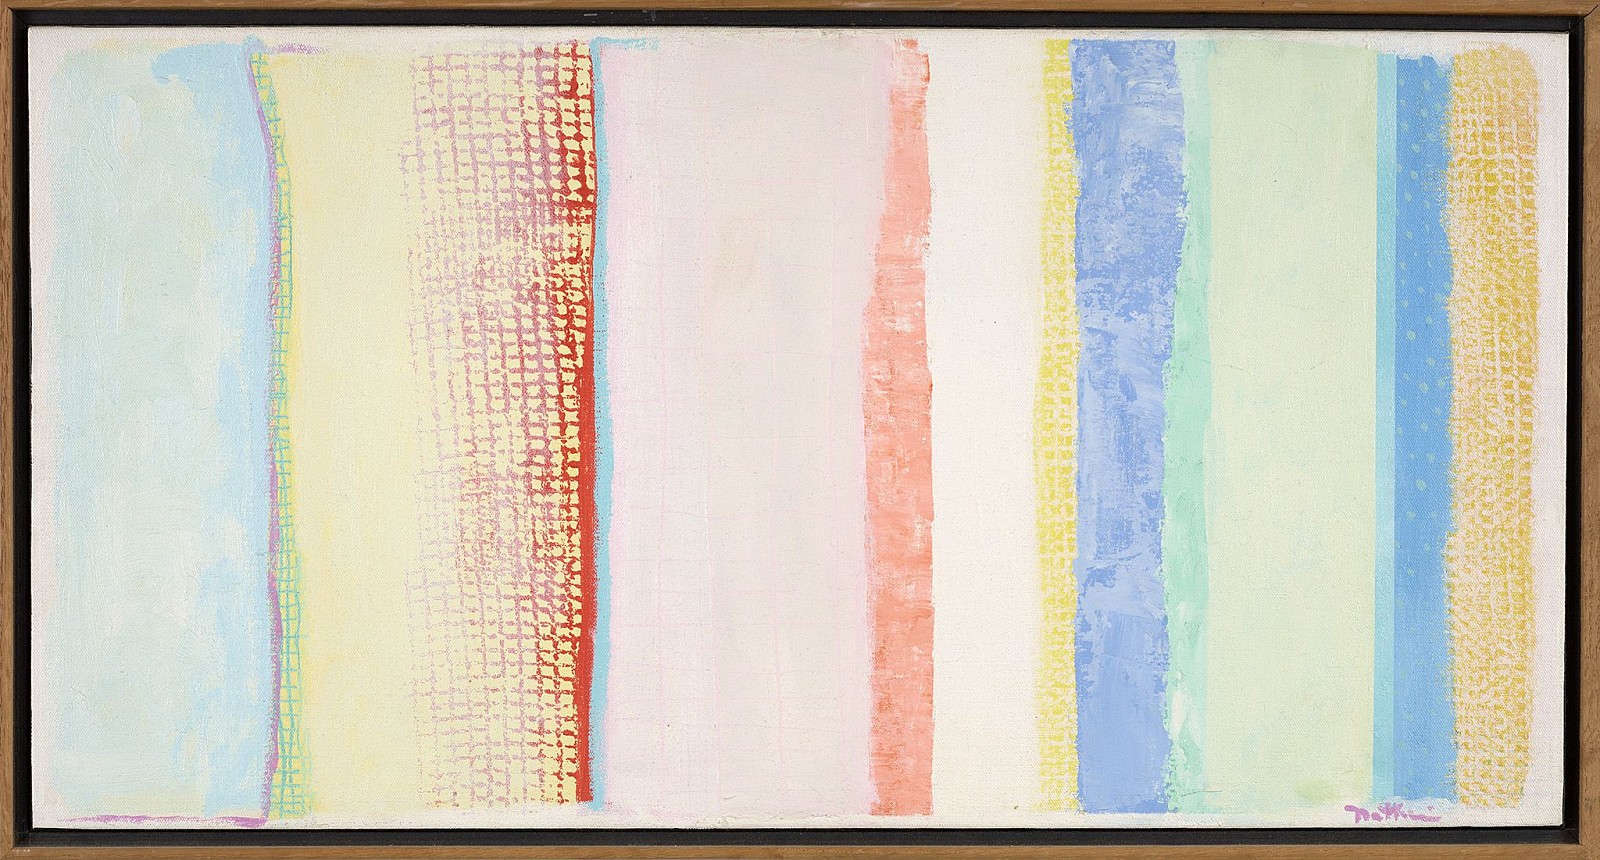 Robert Natkin, Apollo Series, 1980
Acrylic on canvas, 14 1/4 x 27 1/2 in. (36.2 x 69.8 cm)
RNAT-00003